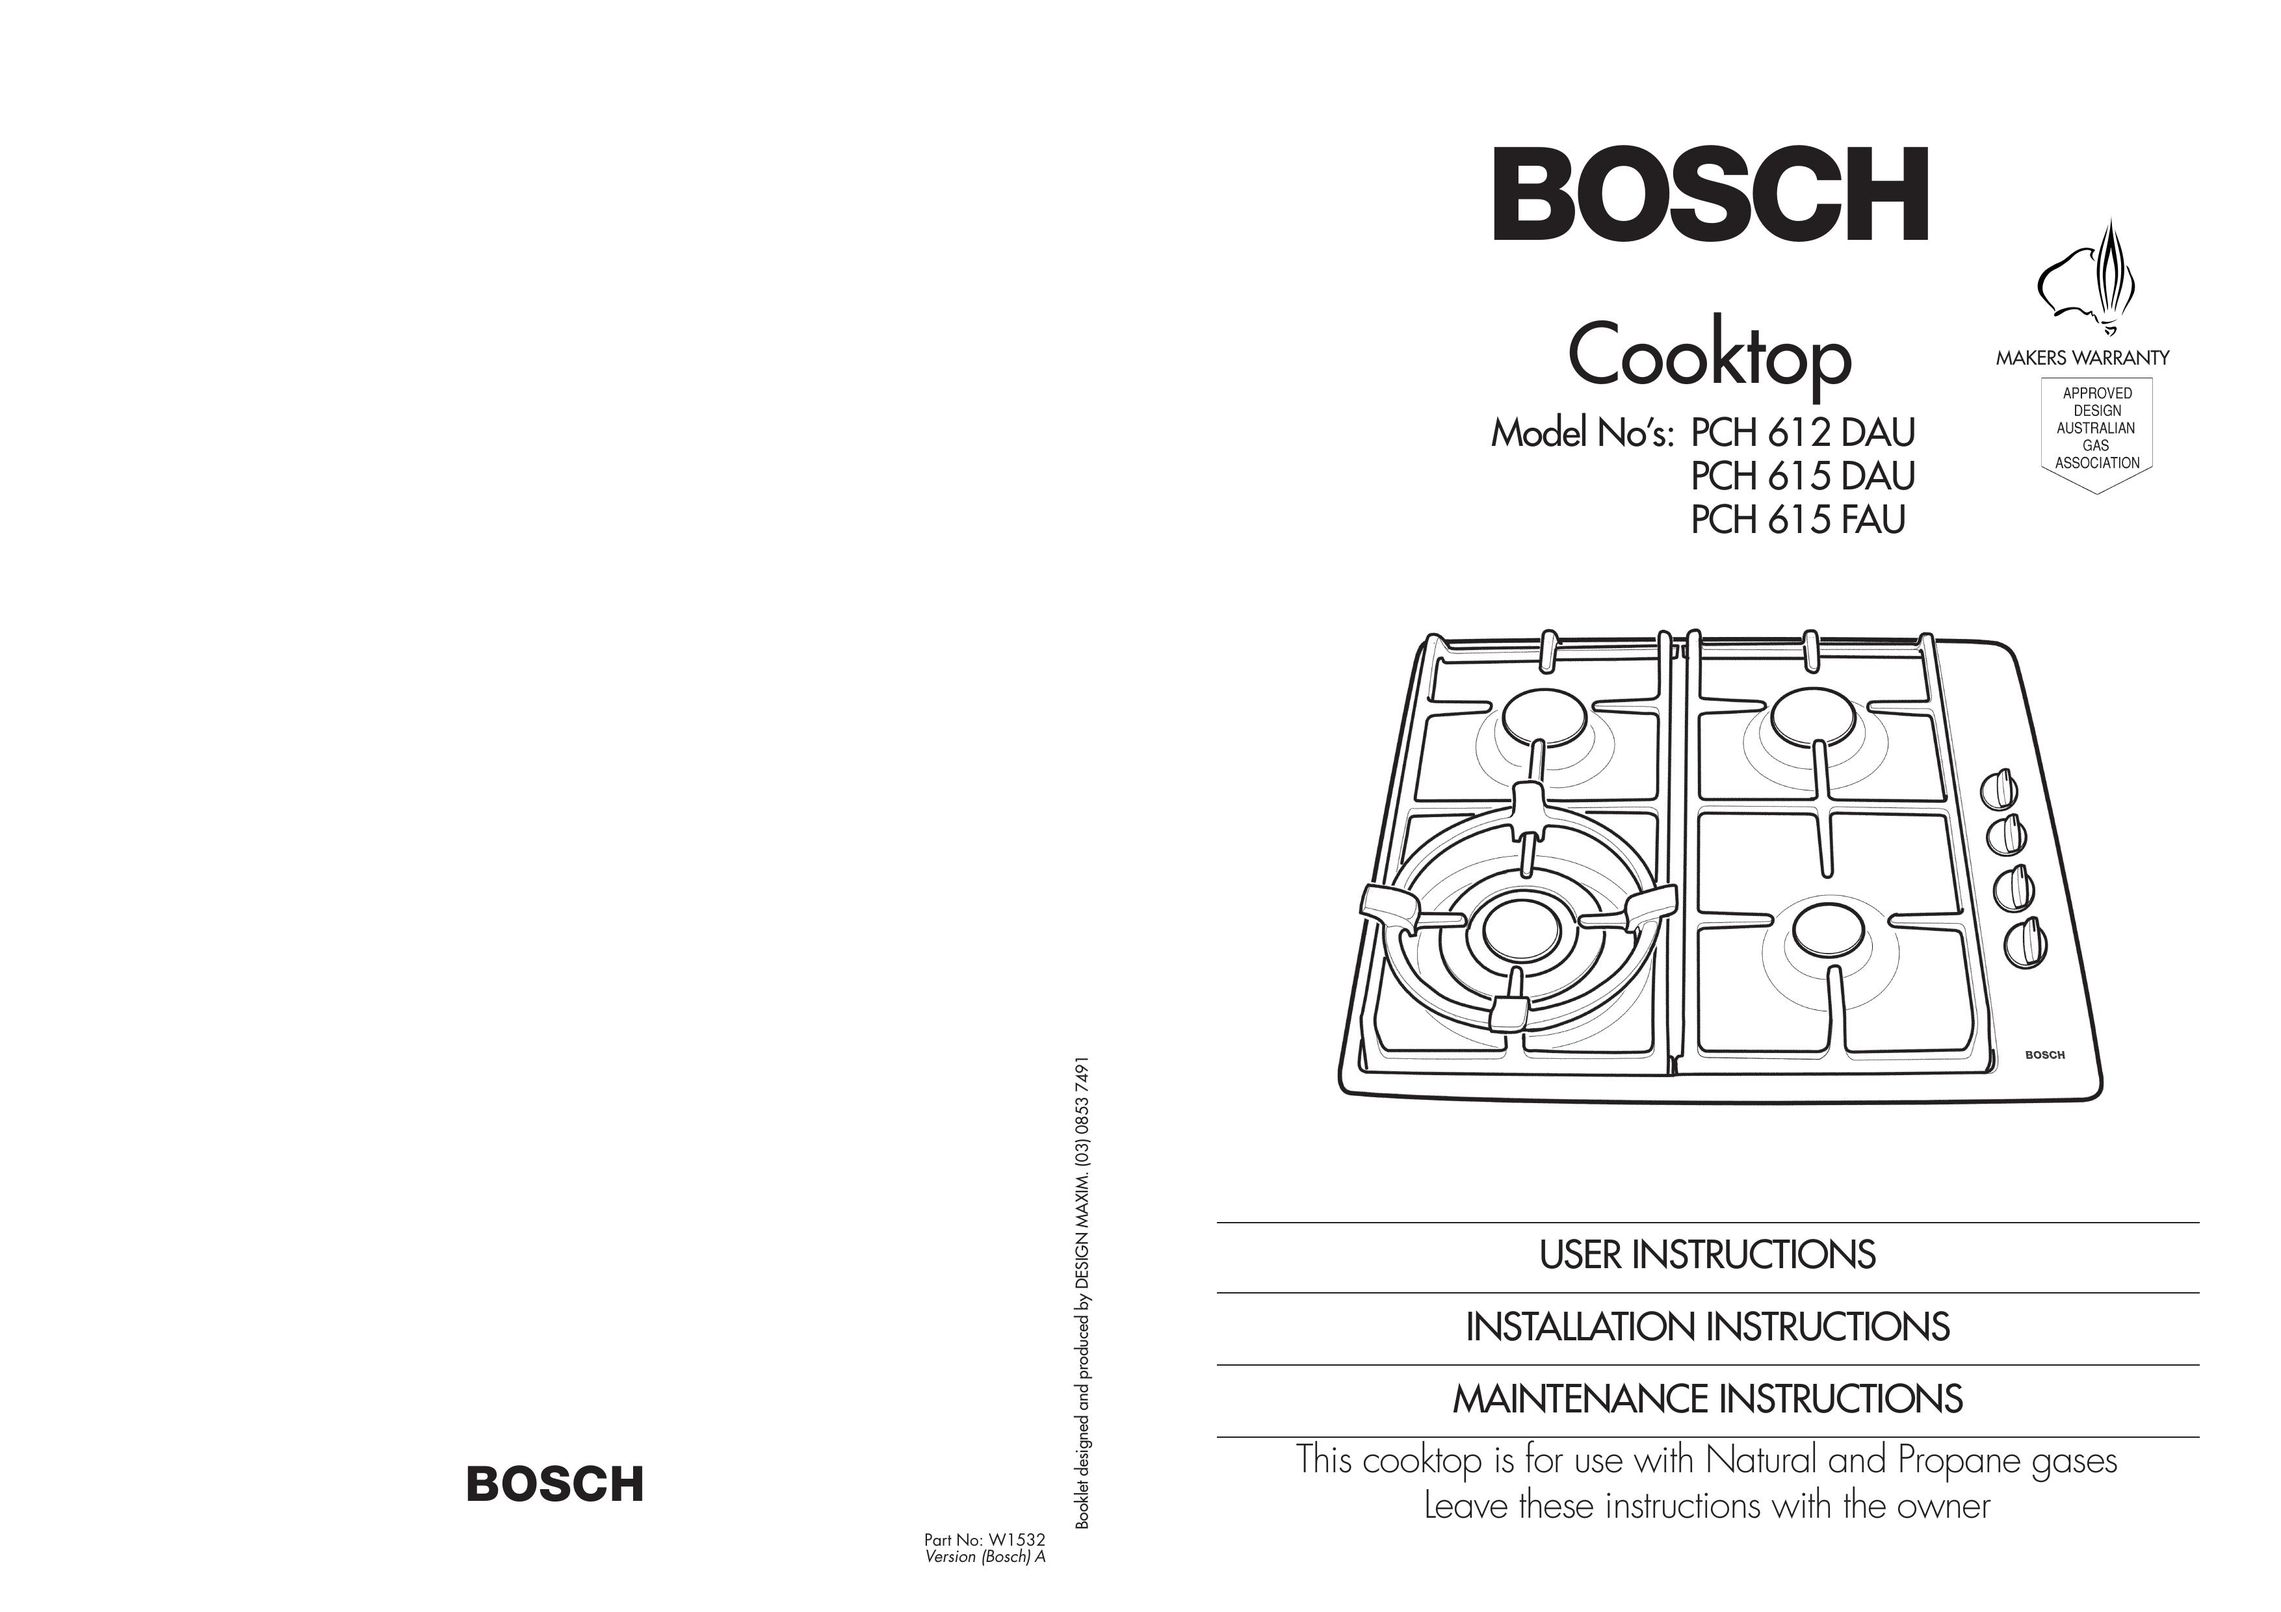 Bosch Appliances PCH 615 FAU Cooktop User Manual